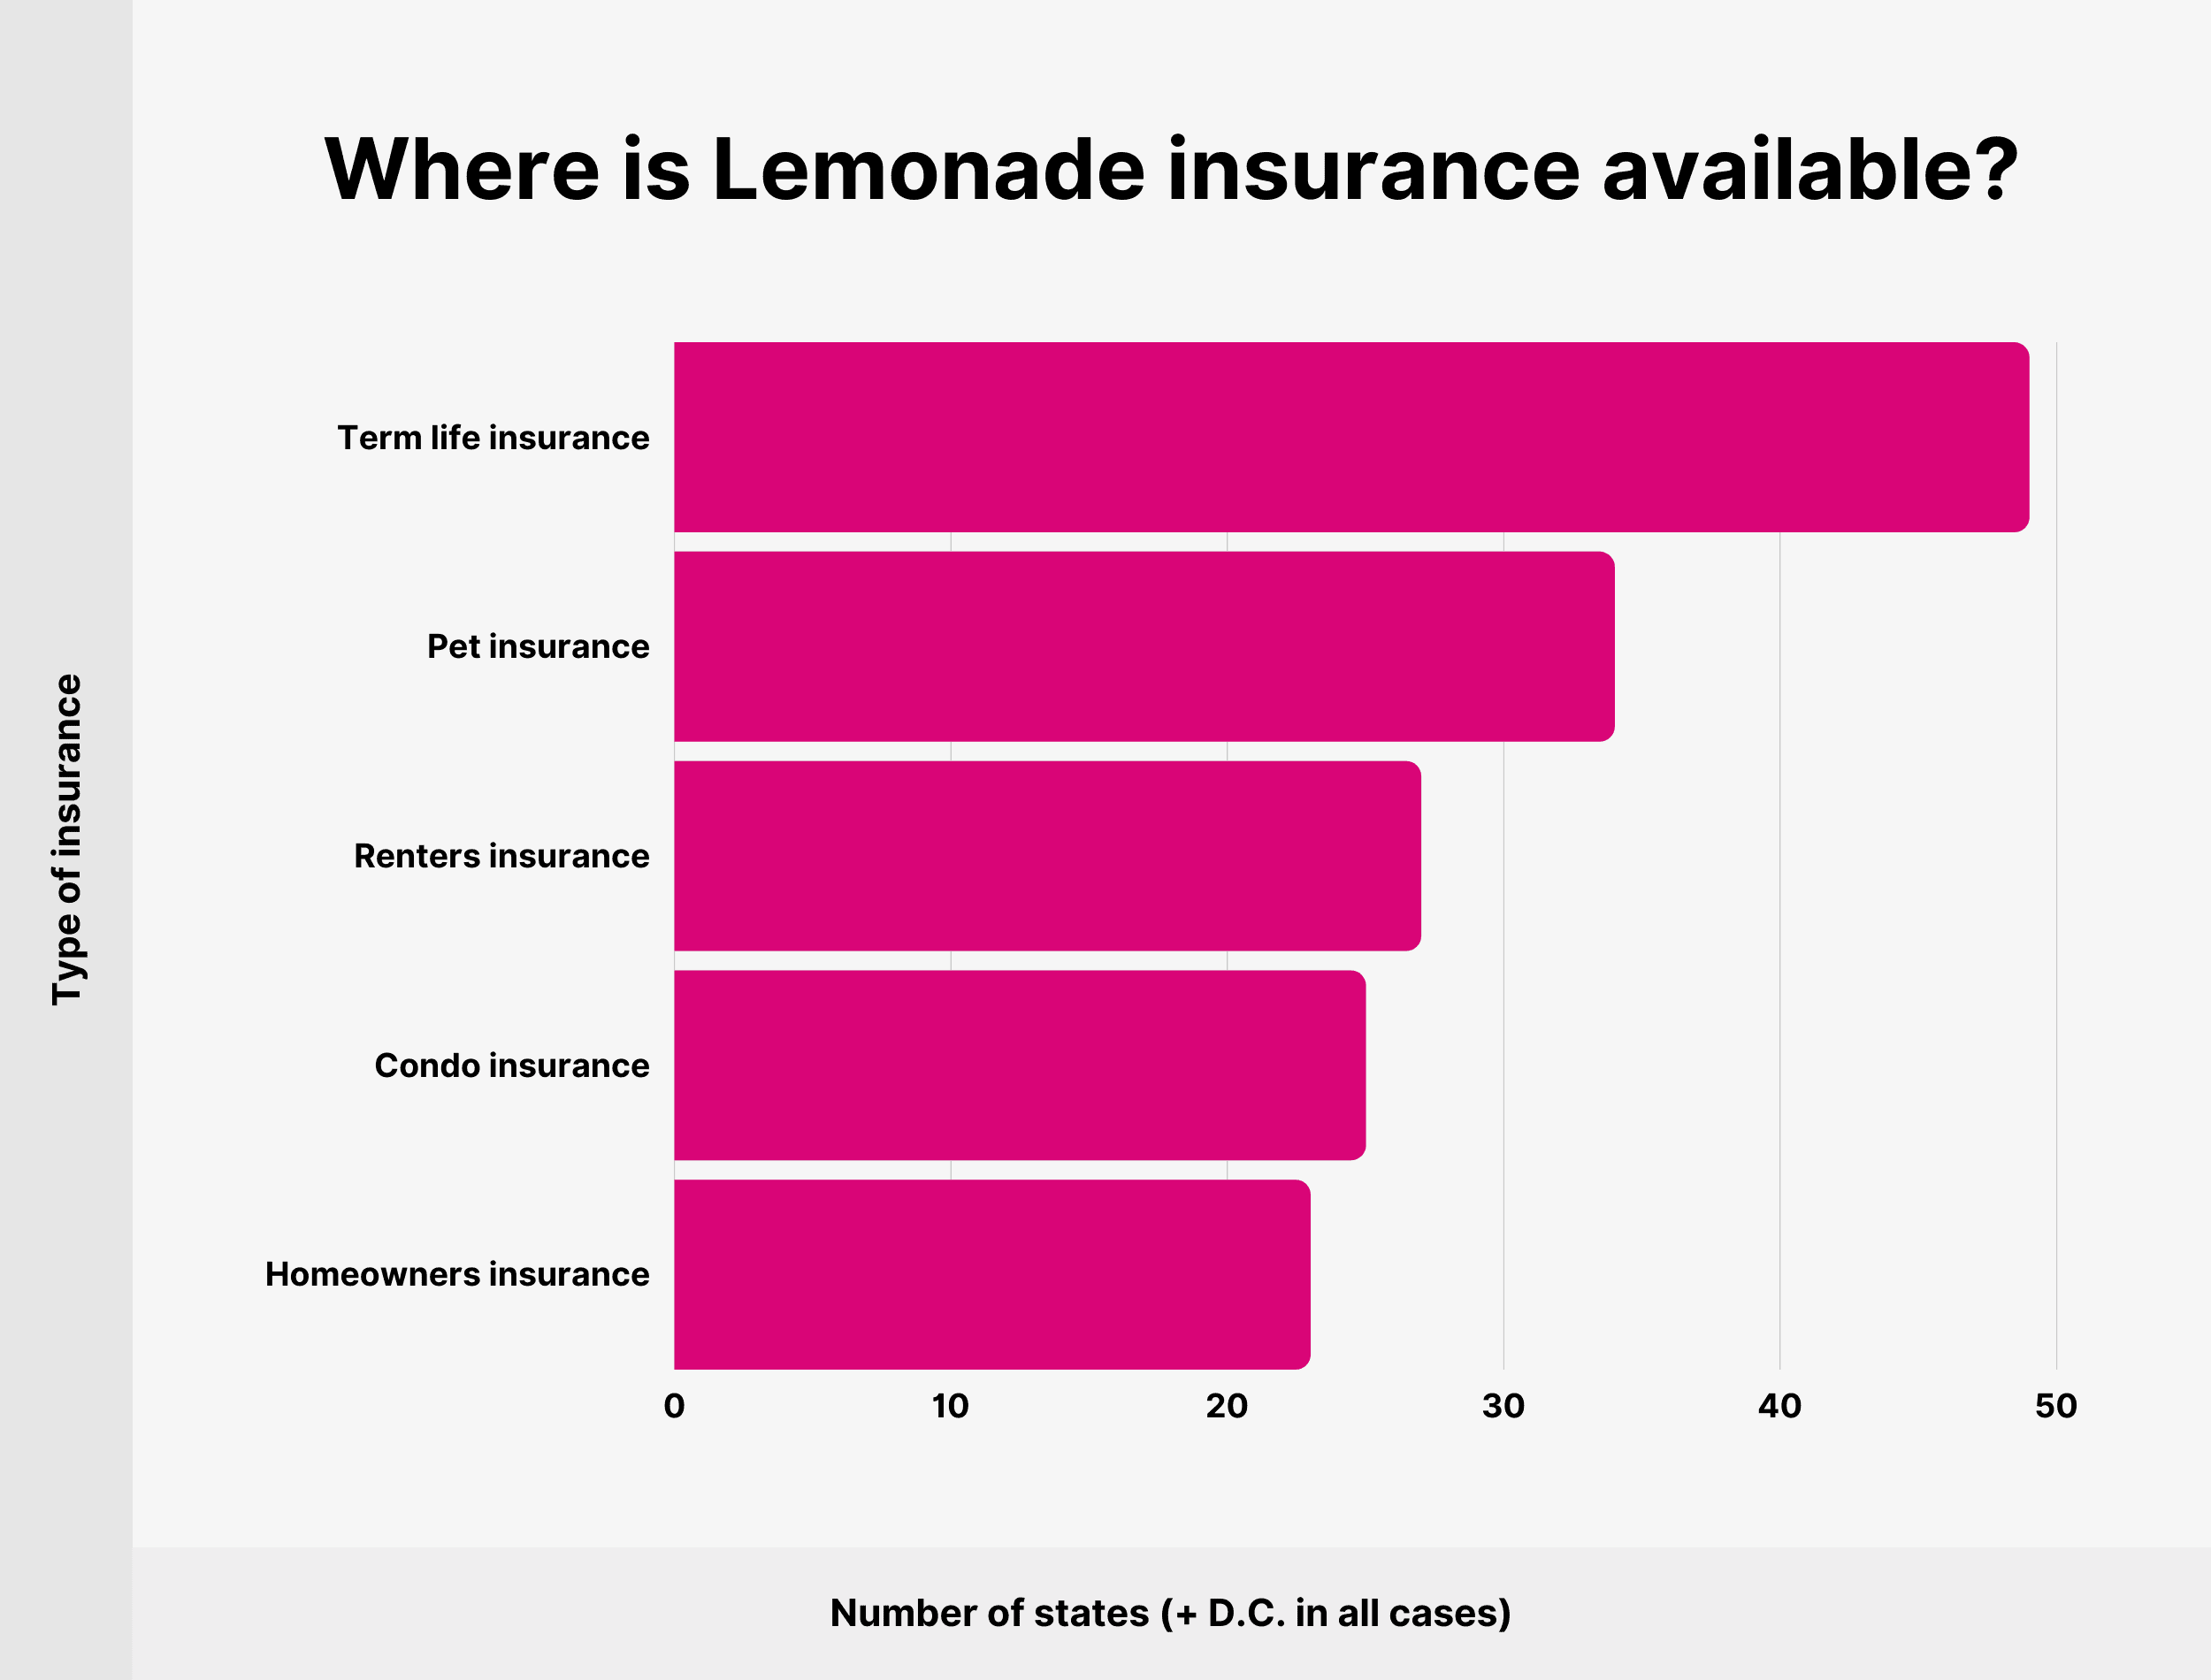 Where is Lemonade insurance available?